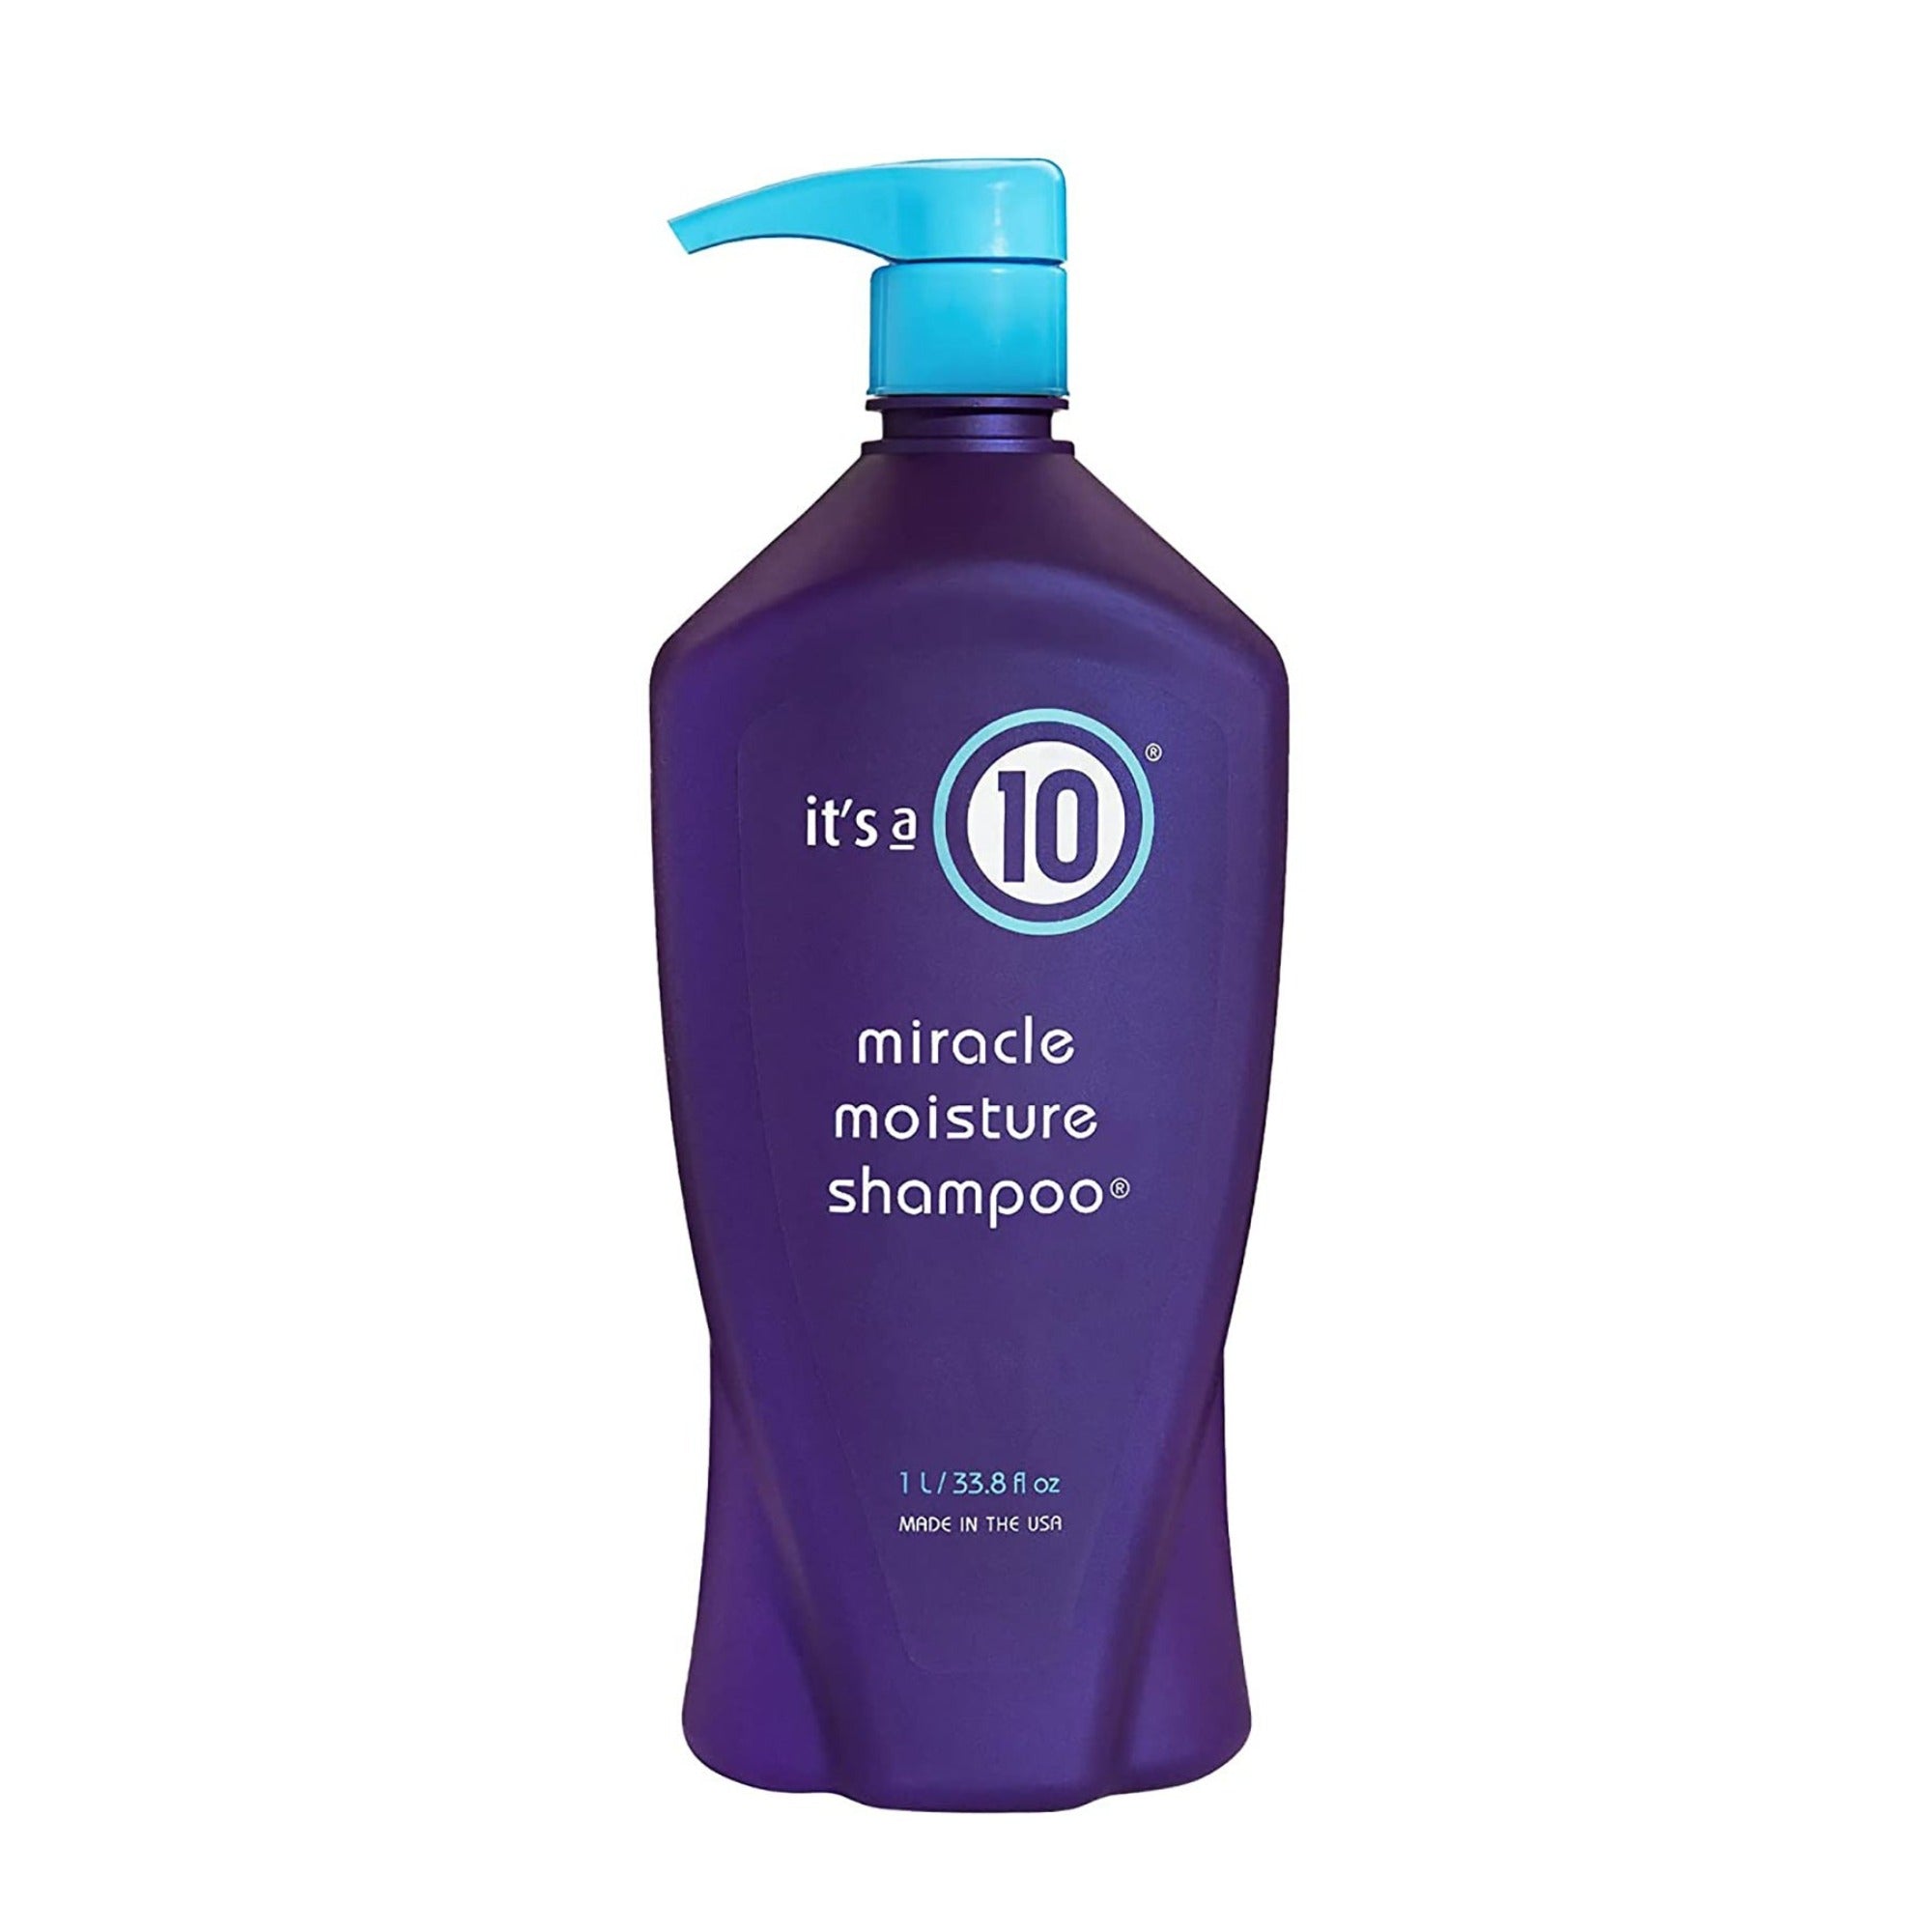 It’s a 10 Miracle Moisture Daily Shampoo - 33oz / 33.OZ